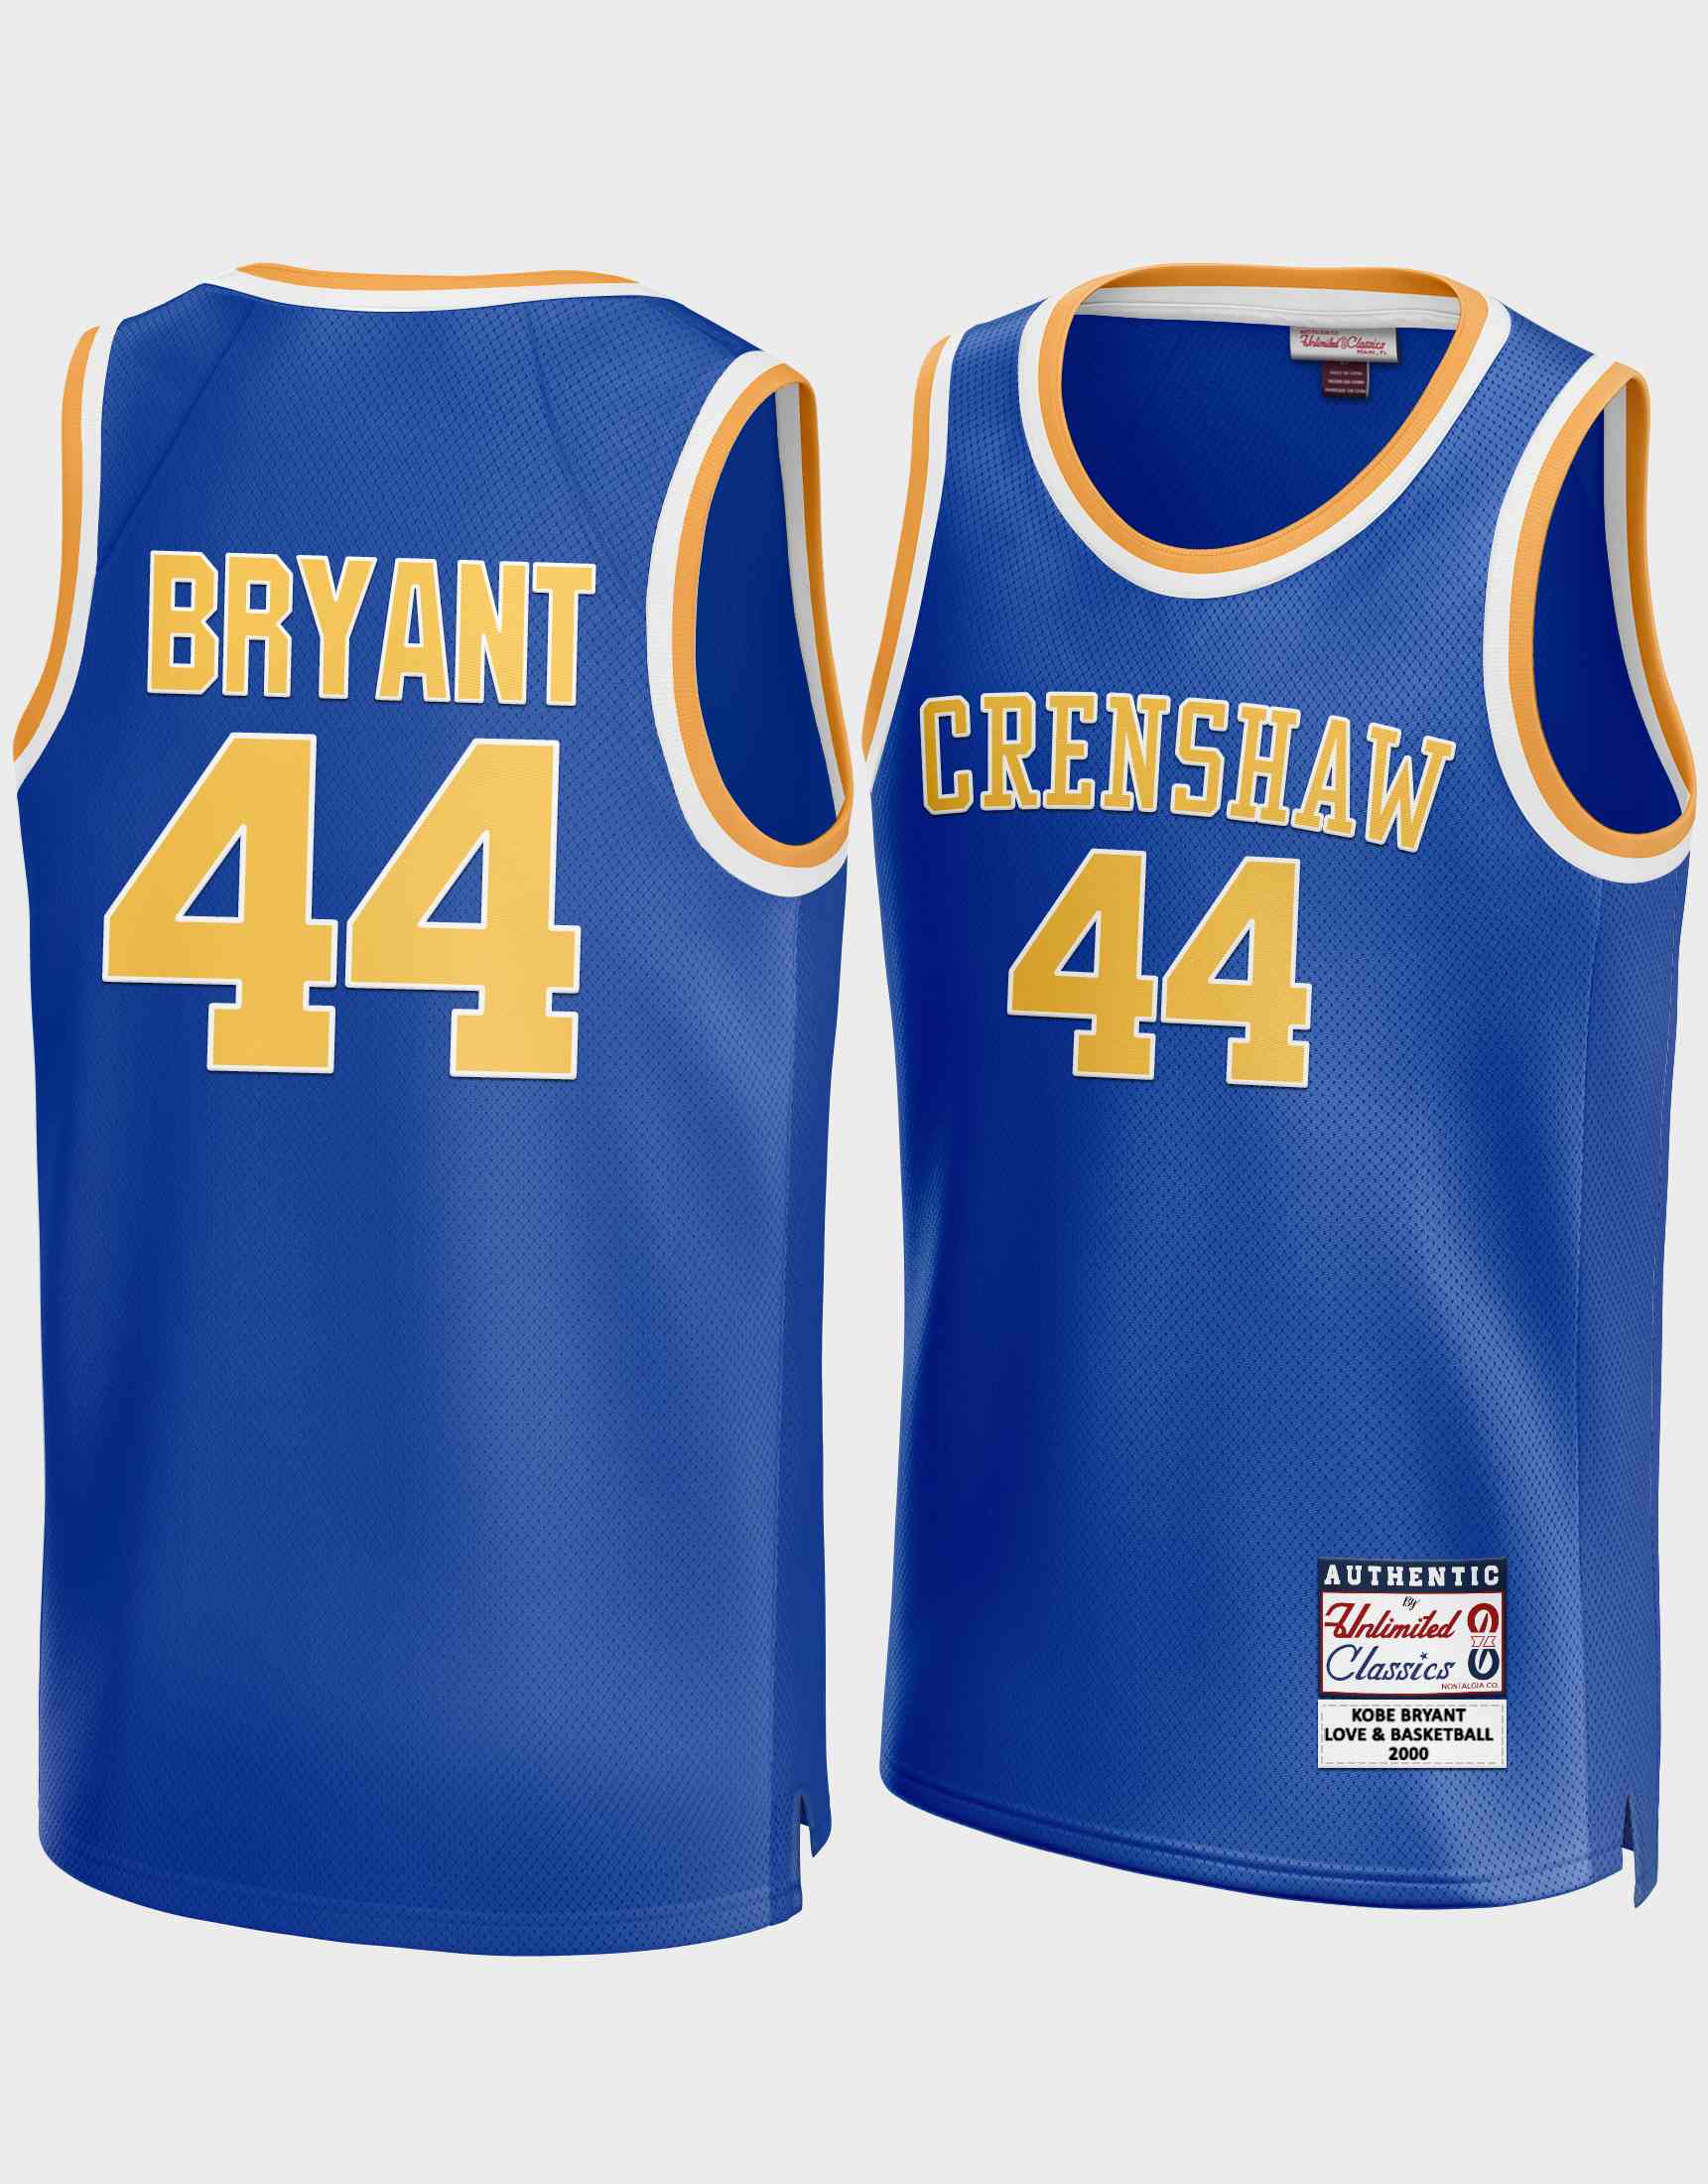 Kobe Bryant Jerseys, Kobe Bryant Shirts, Basketball Apparel, Kobe Bryant  Gear